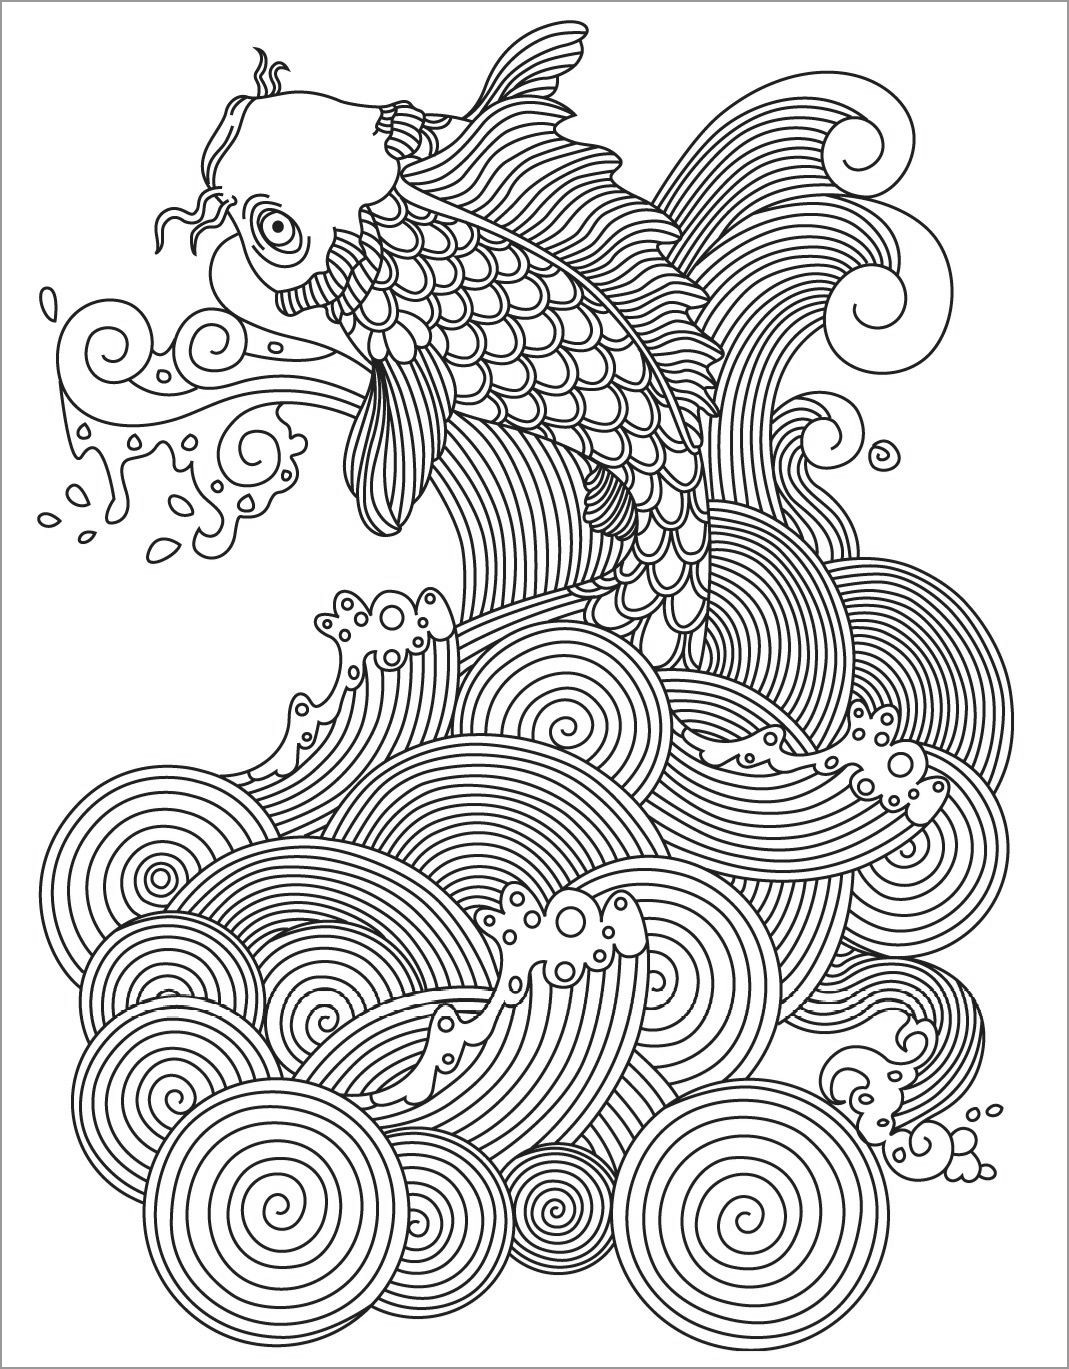 Carp Fish Mandala Coloring Page for Adult